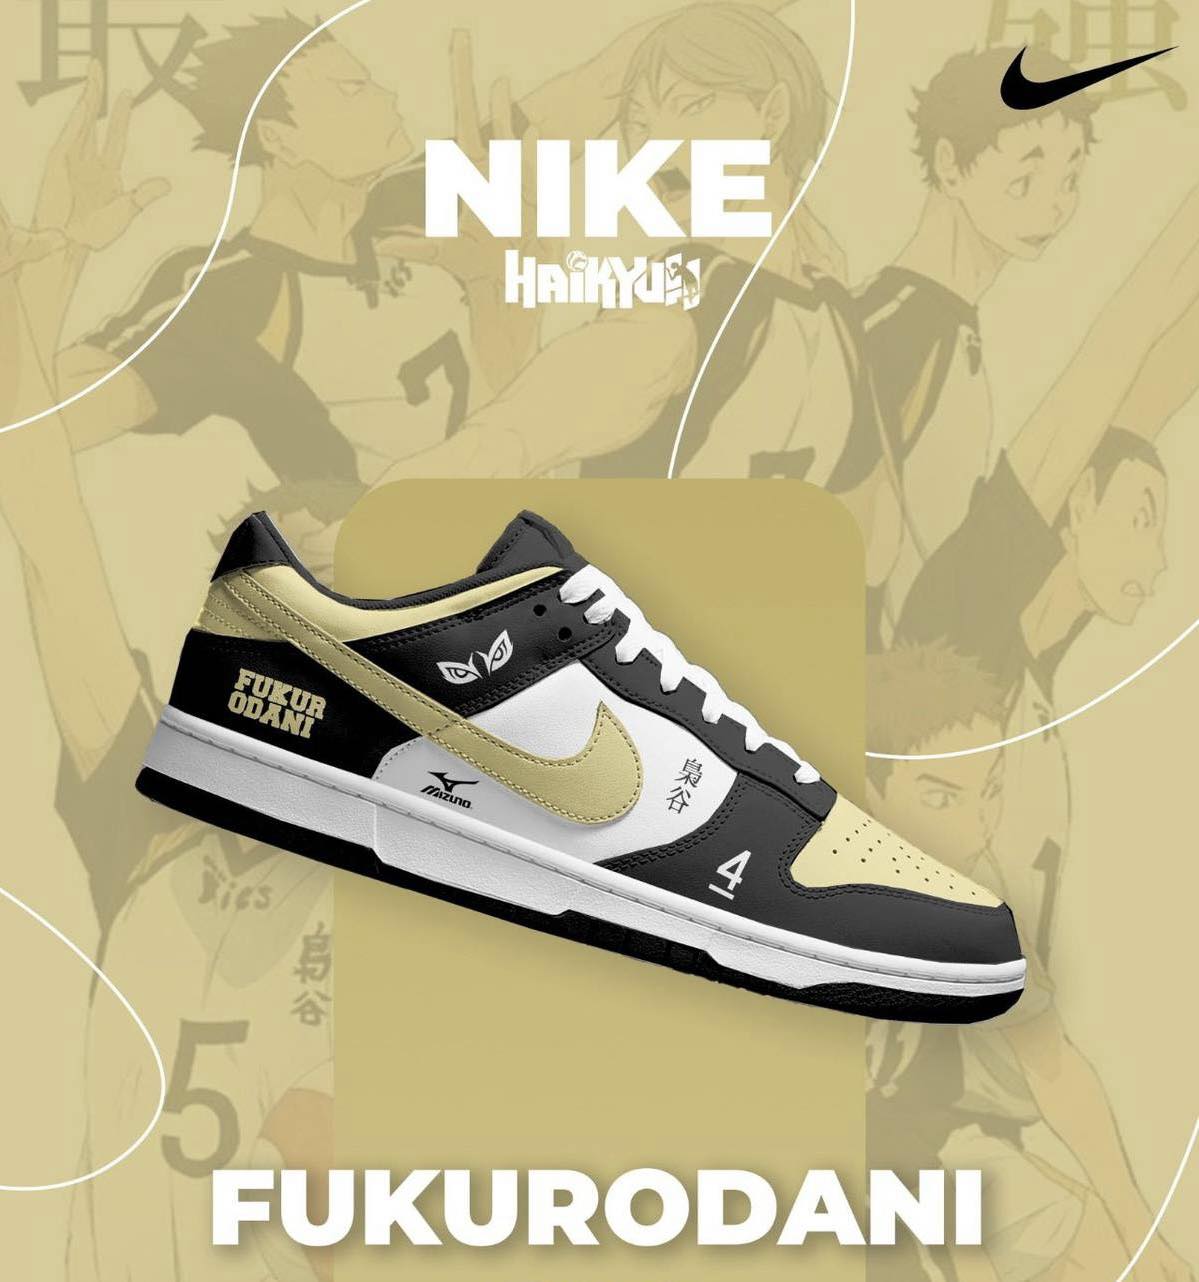 Haikyuu x Nike original high quality